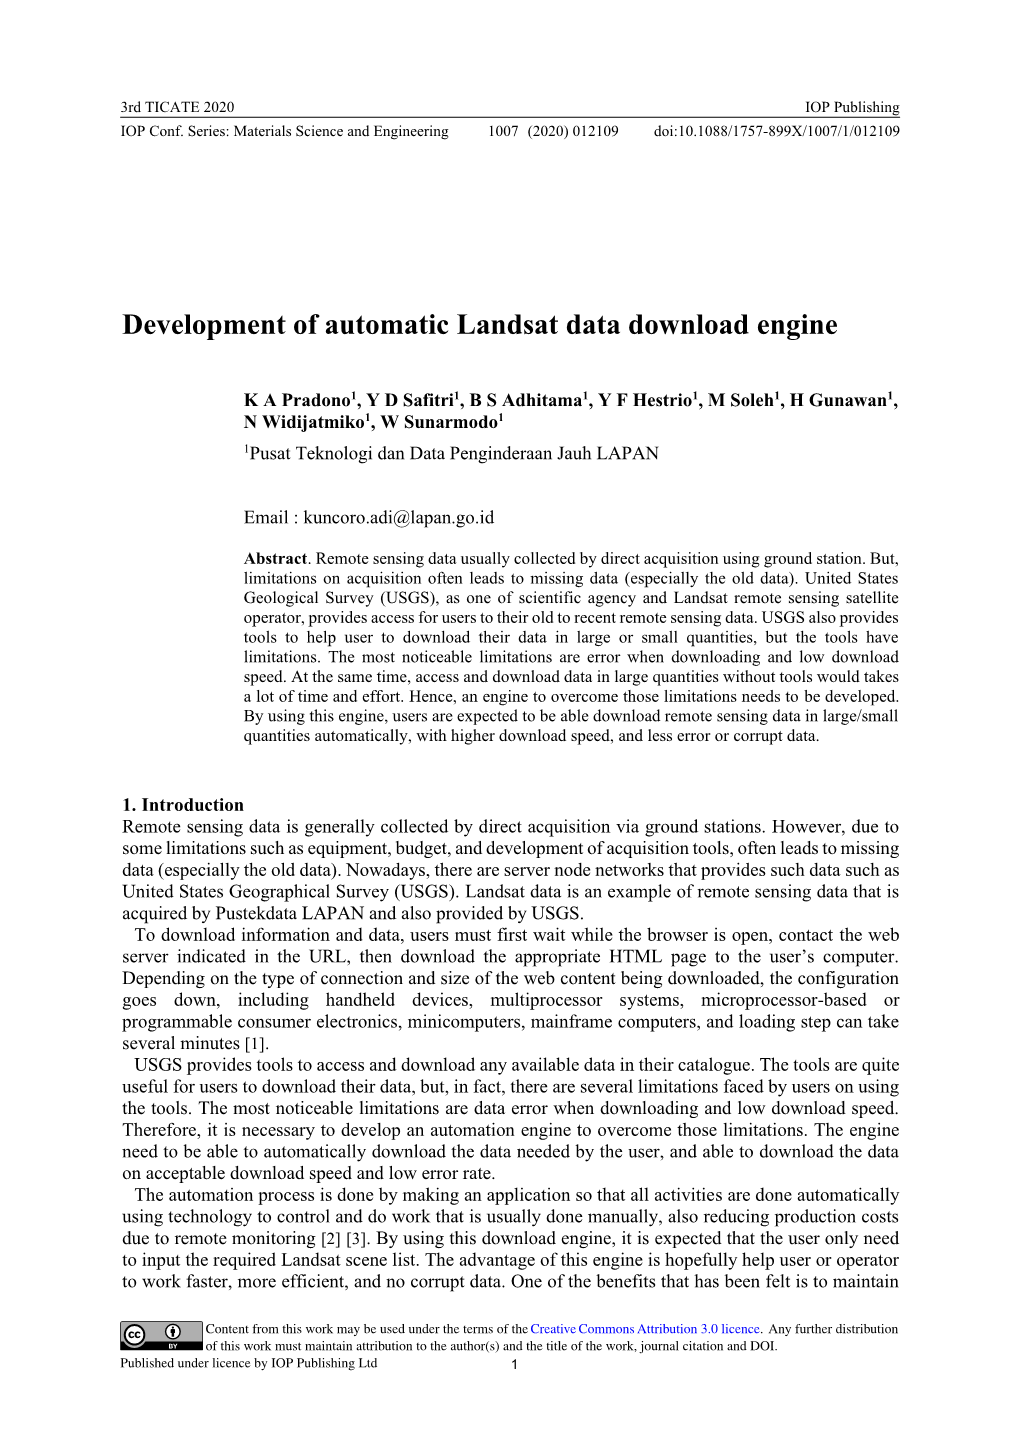 Development of Automatic Landsat Data Download Engine